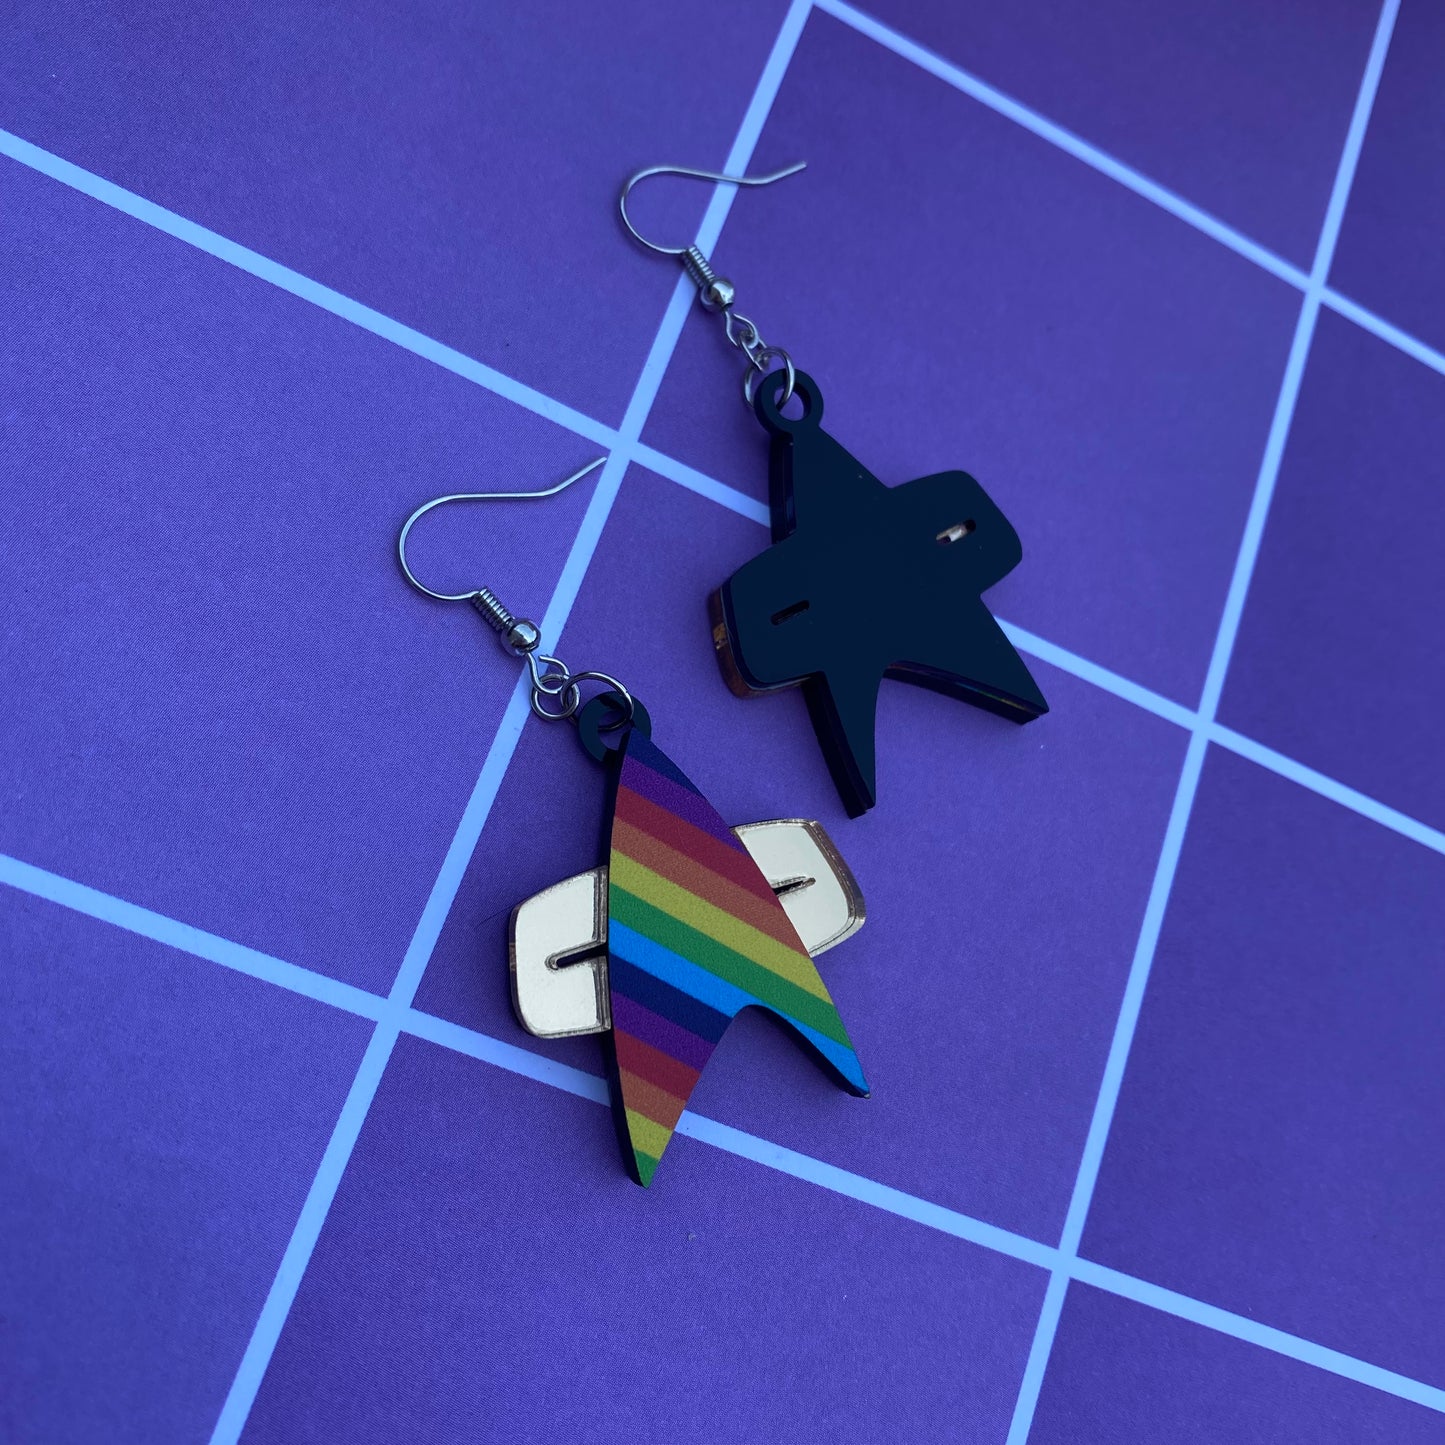 DS9/VOY Rainbow Commbadge Earrings